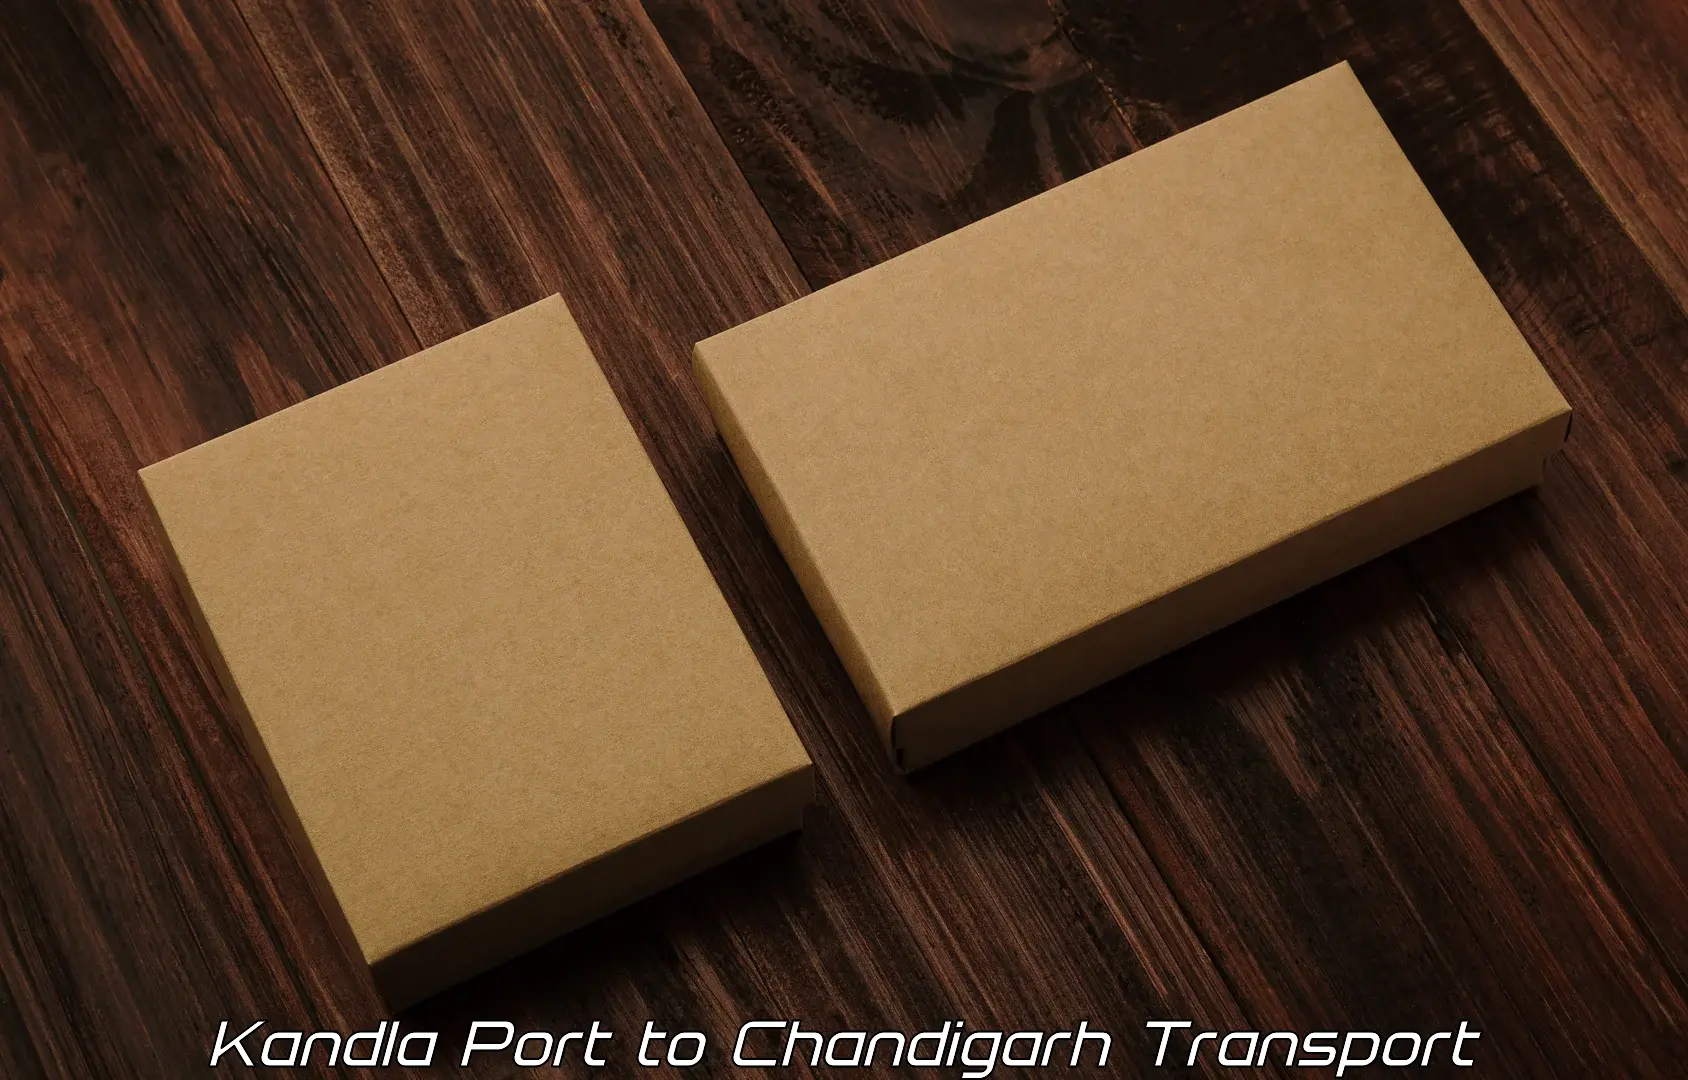 Furniture transport service Kandla Port to Chandigarh